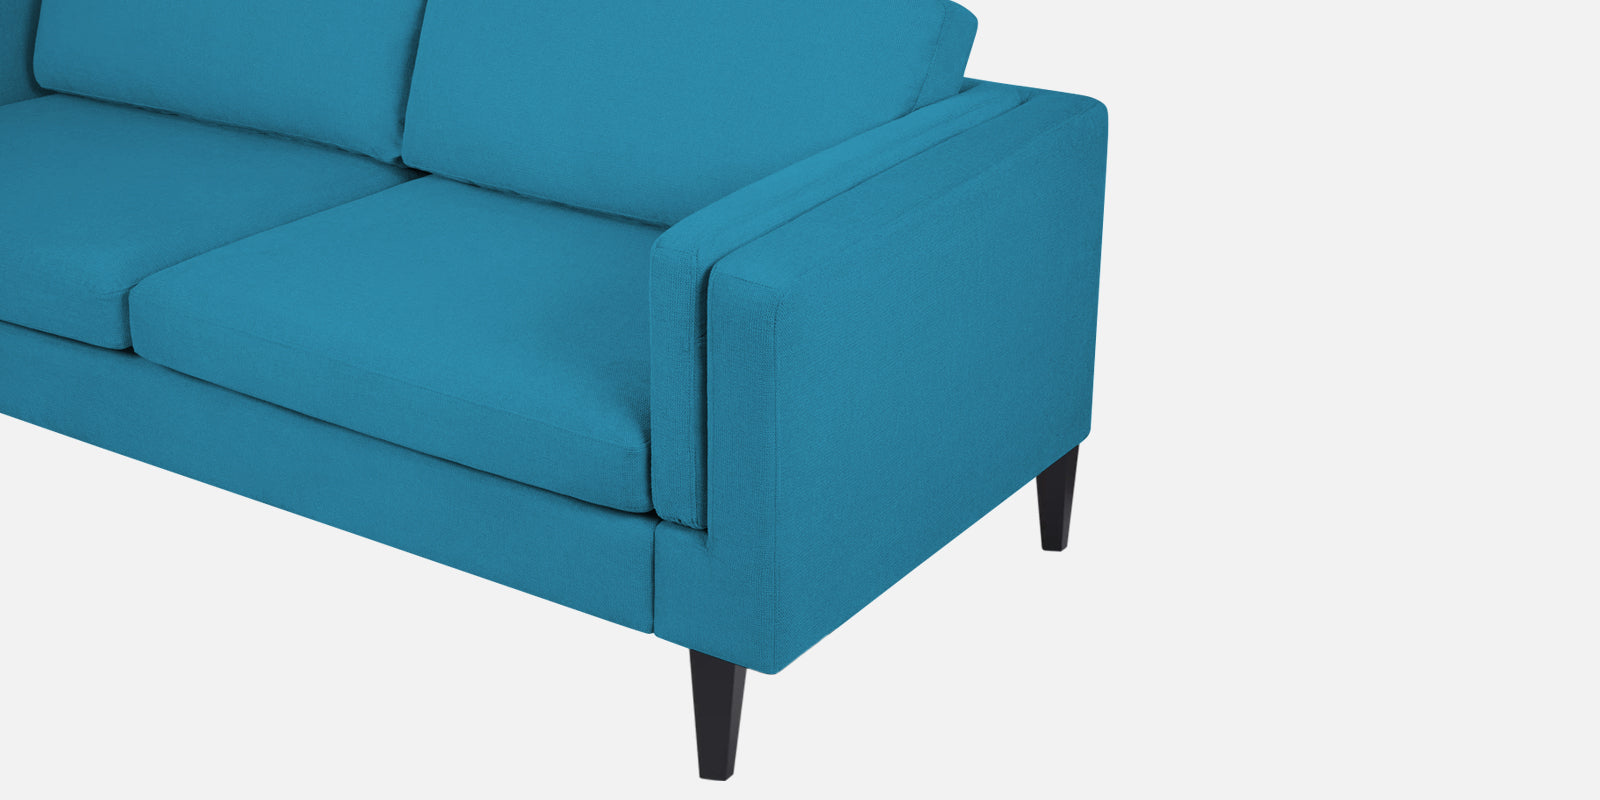 Jasper Velvet 3 Seater Sofa in Aqua blue Colour